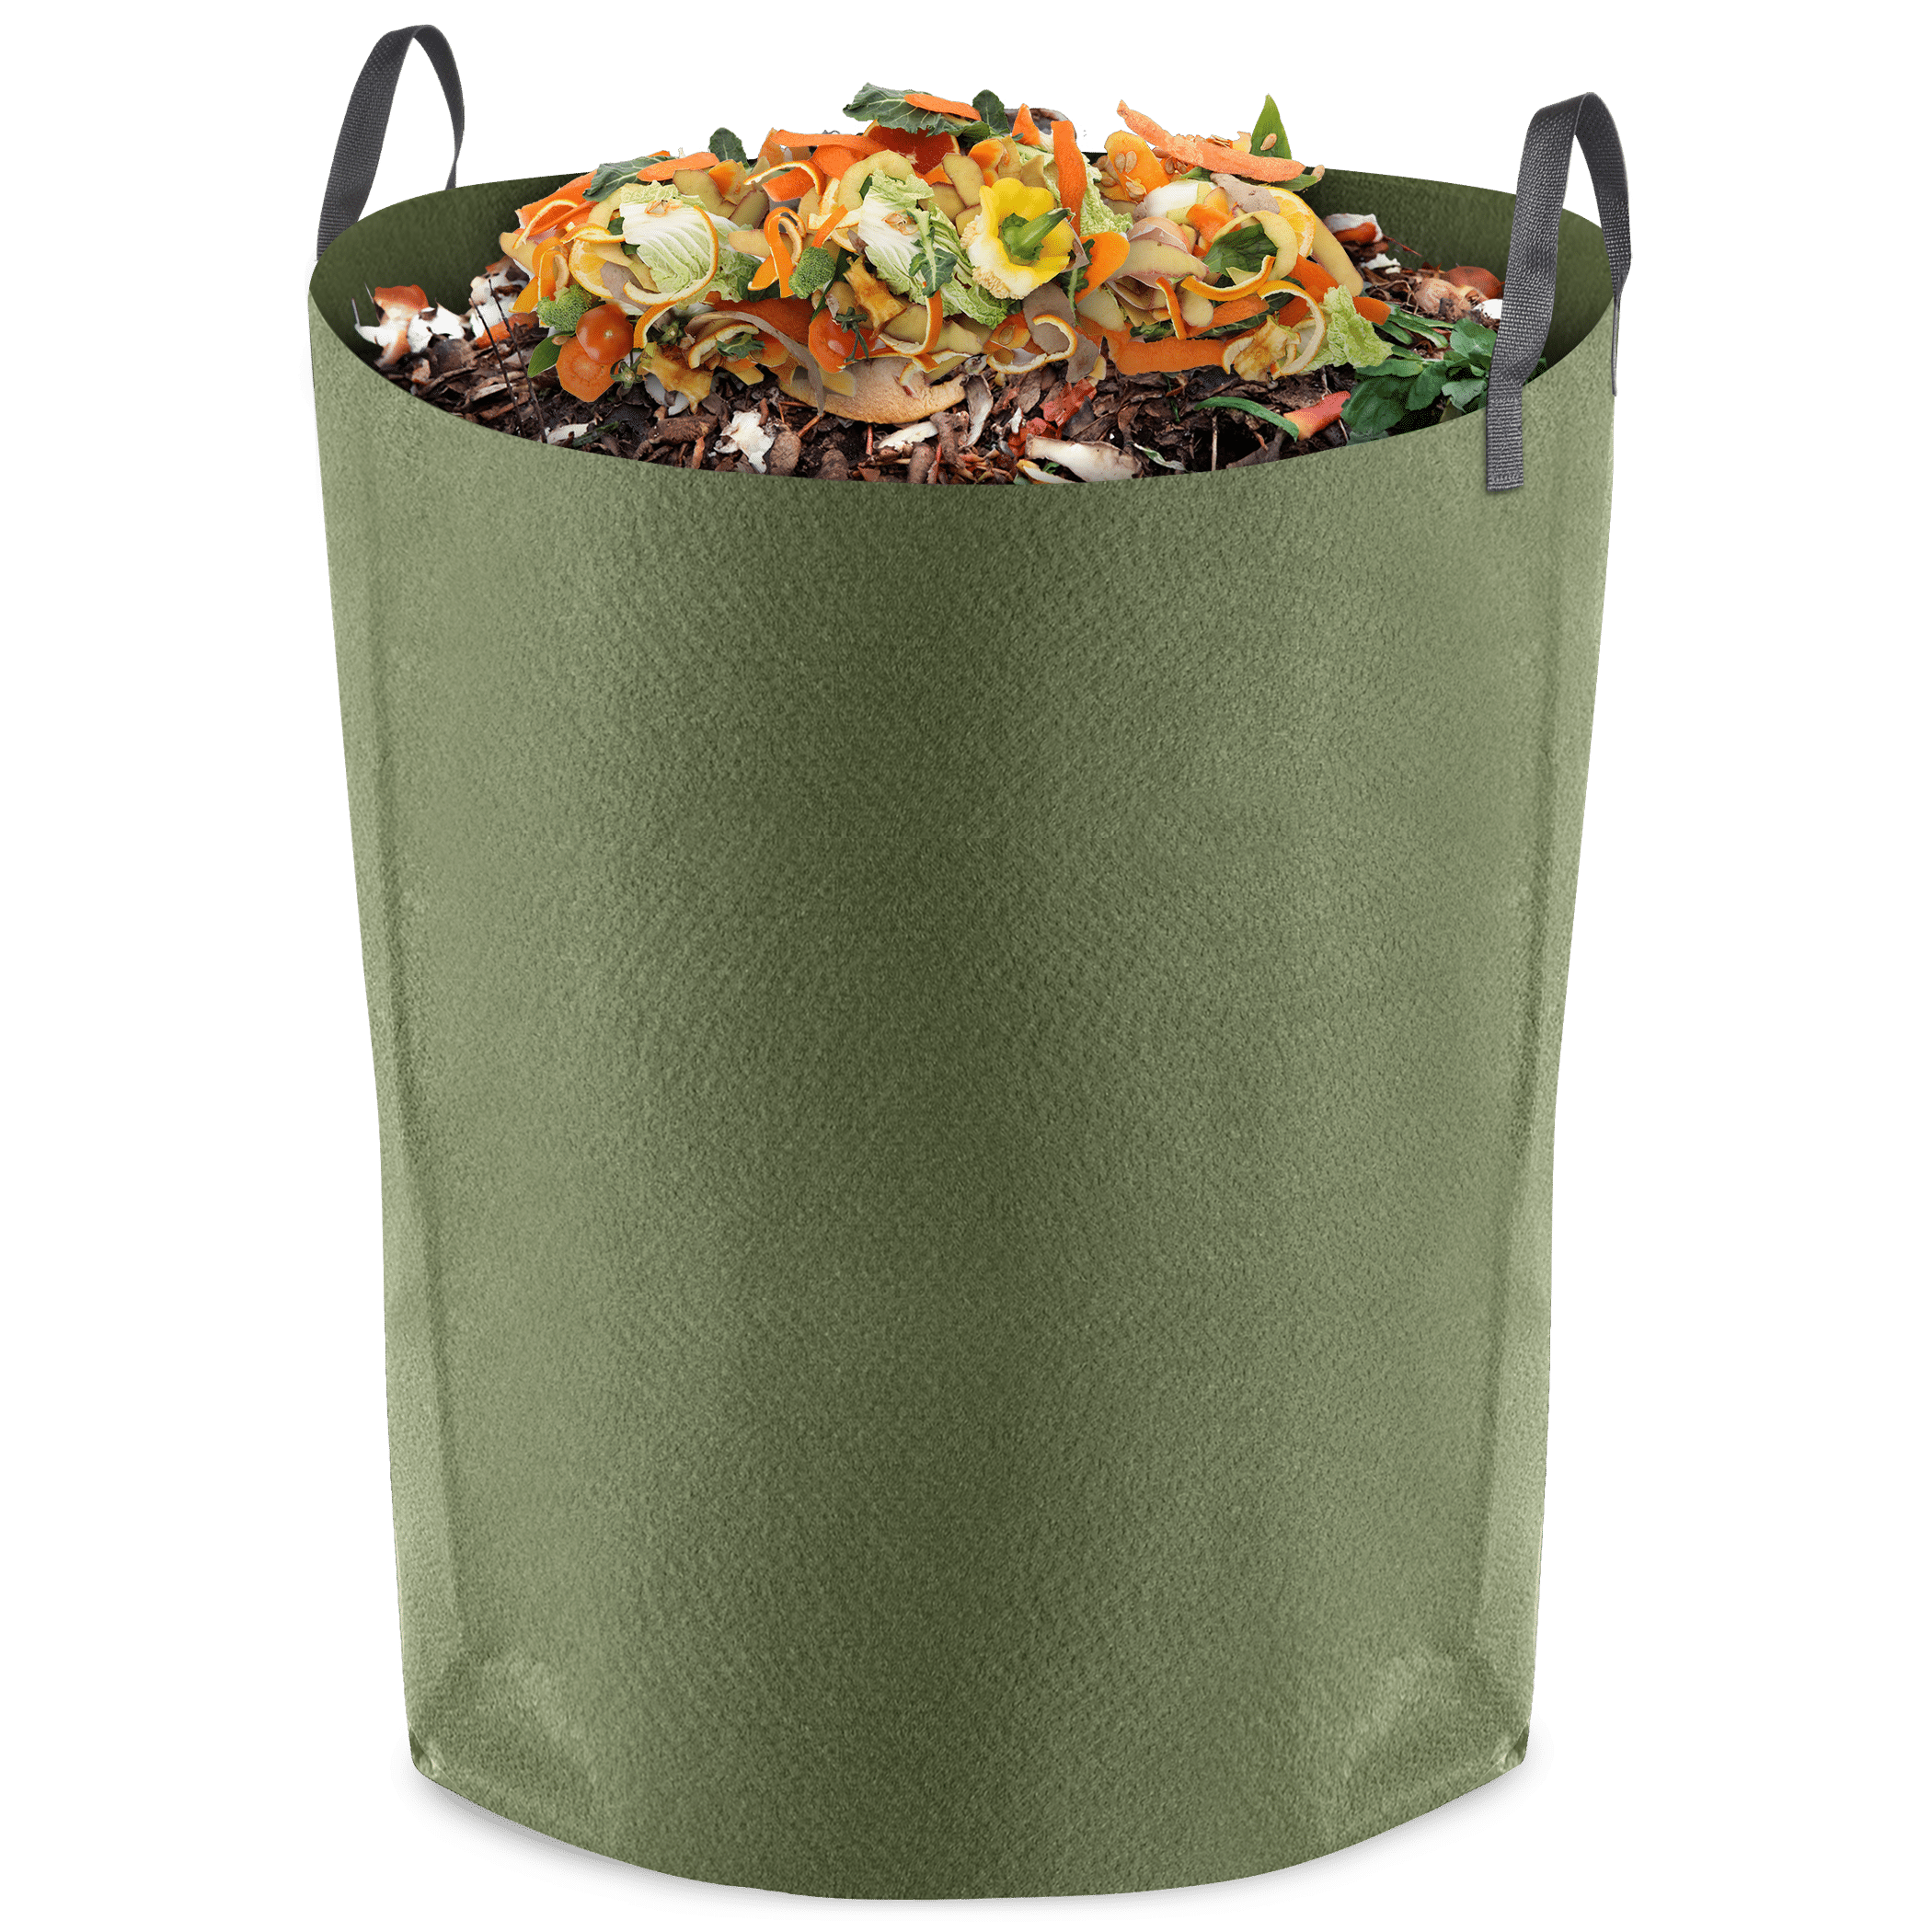 Smart Pots 12120 Compost Sak Fabric Composting Container